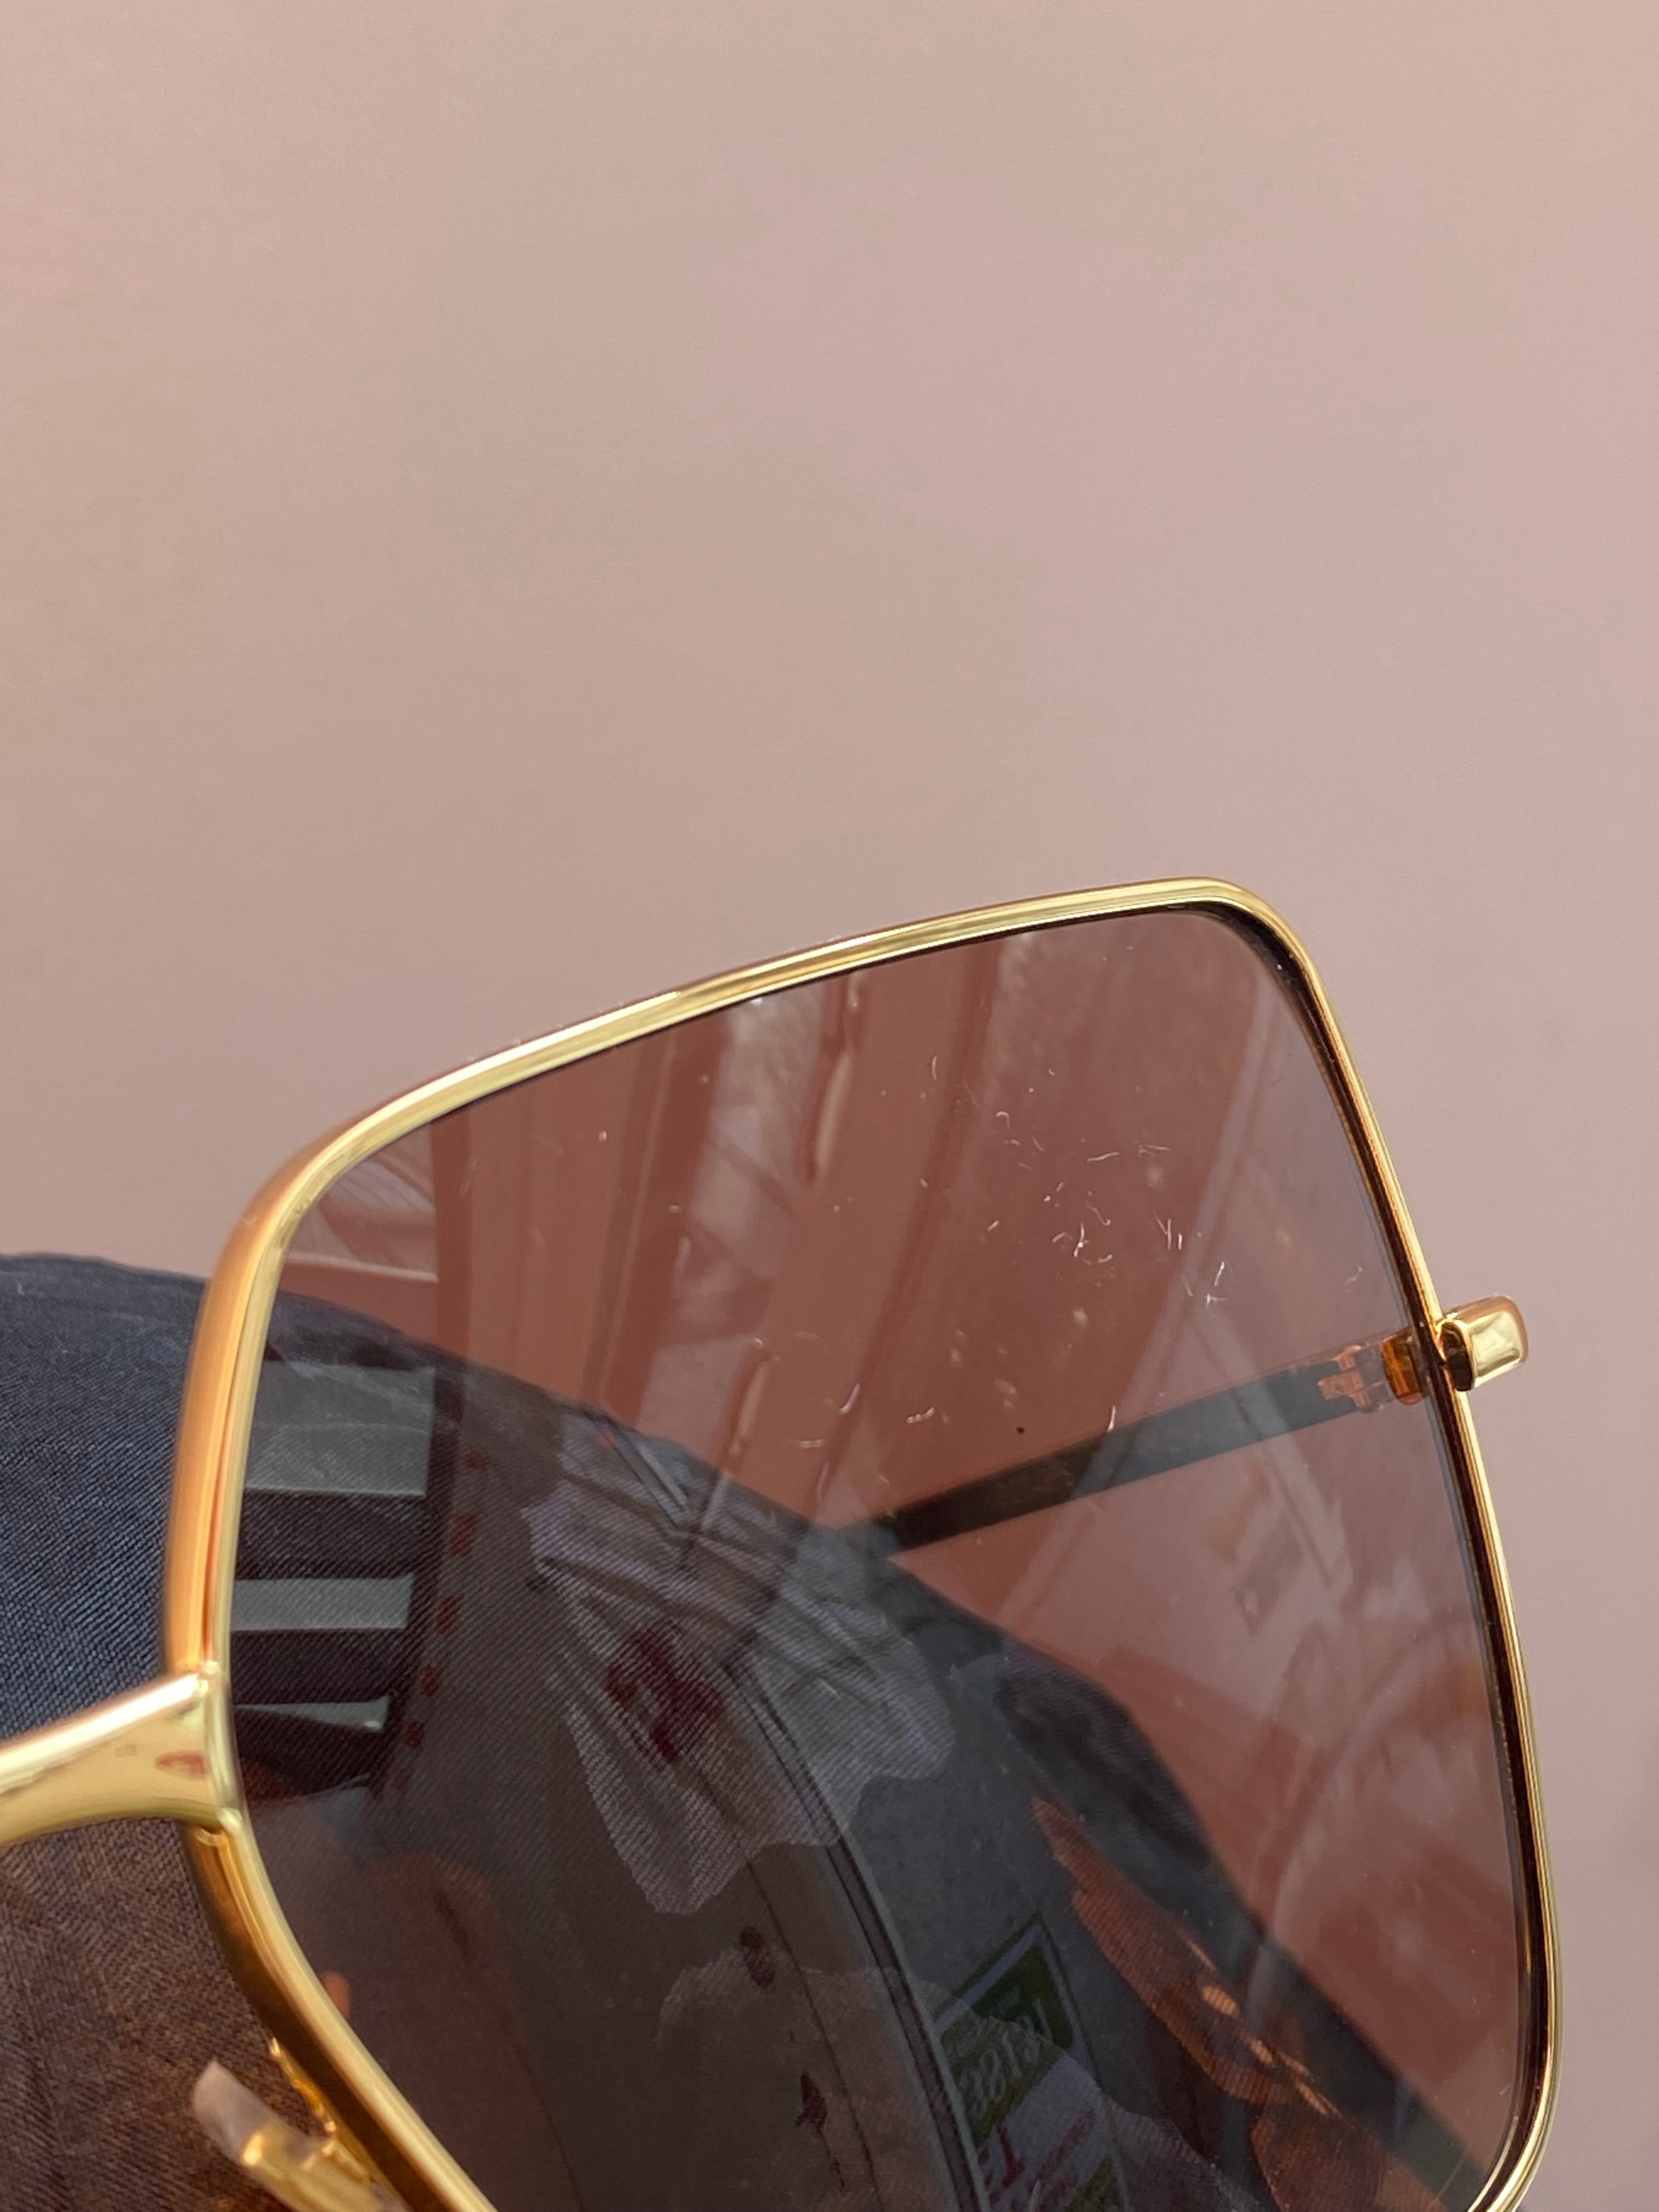 Gucci Oversized Sunglasses